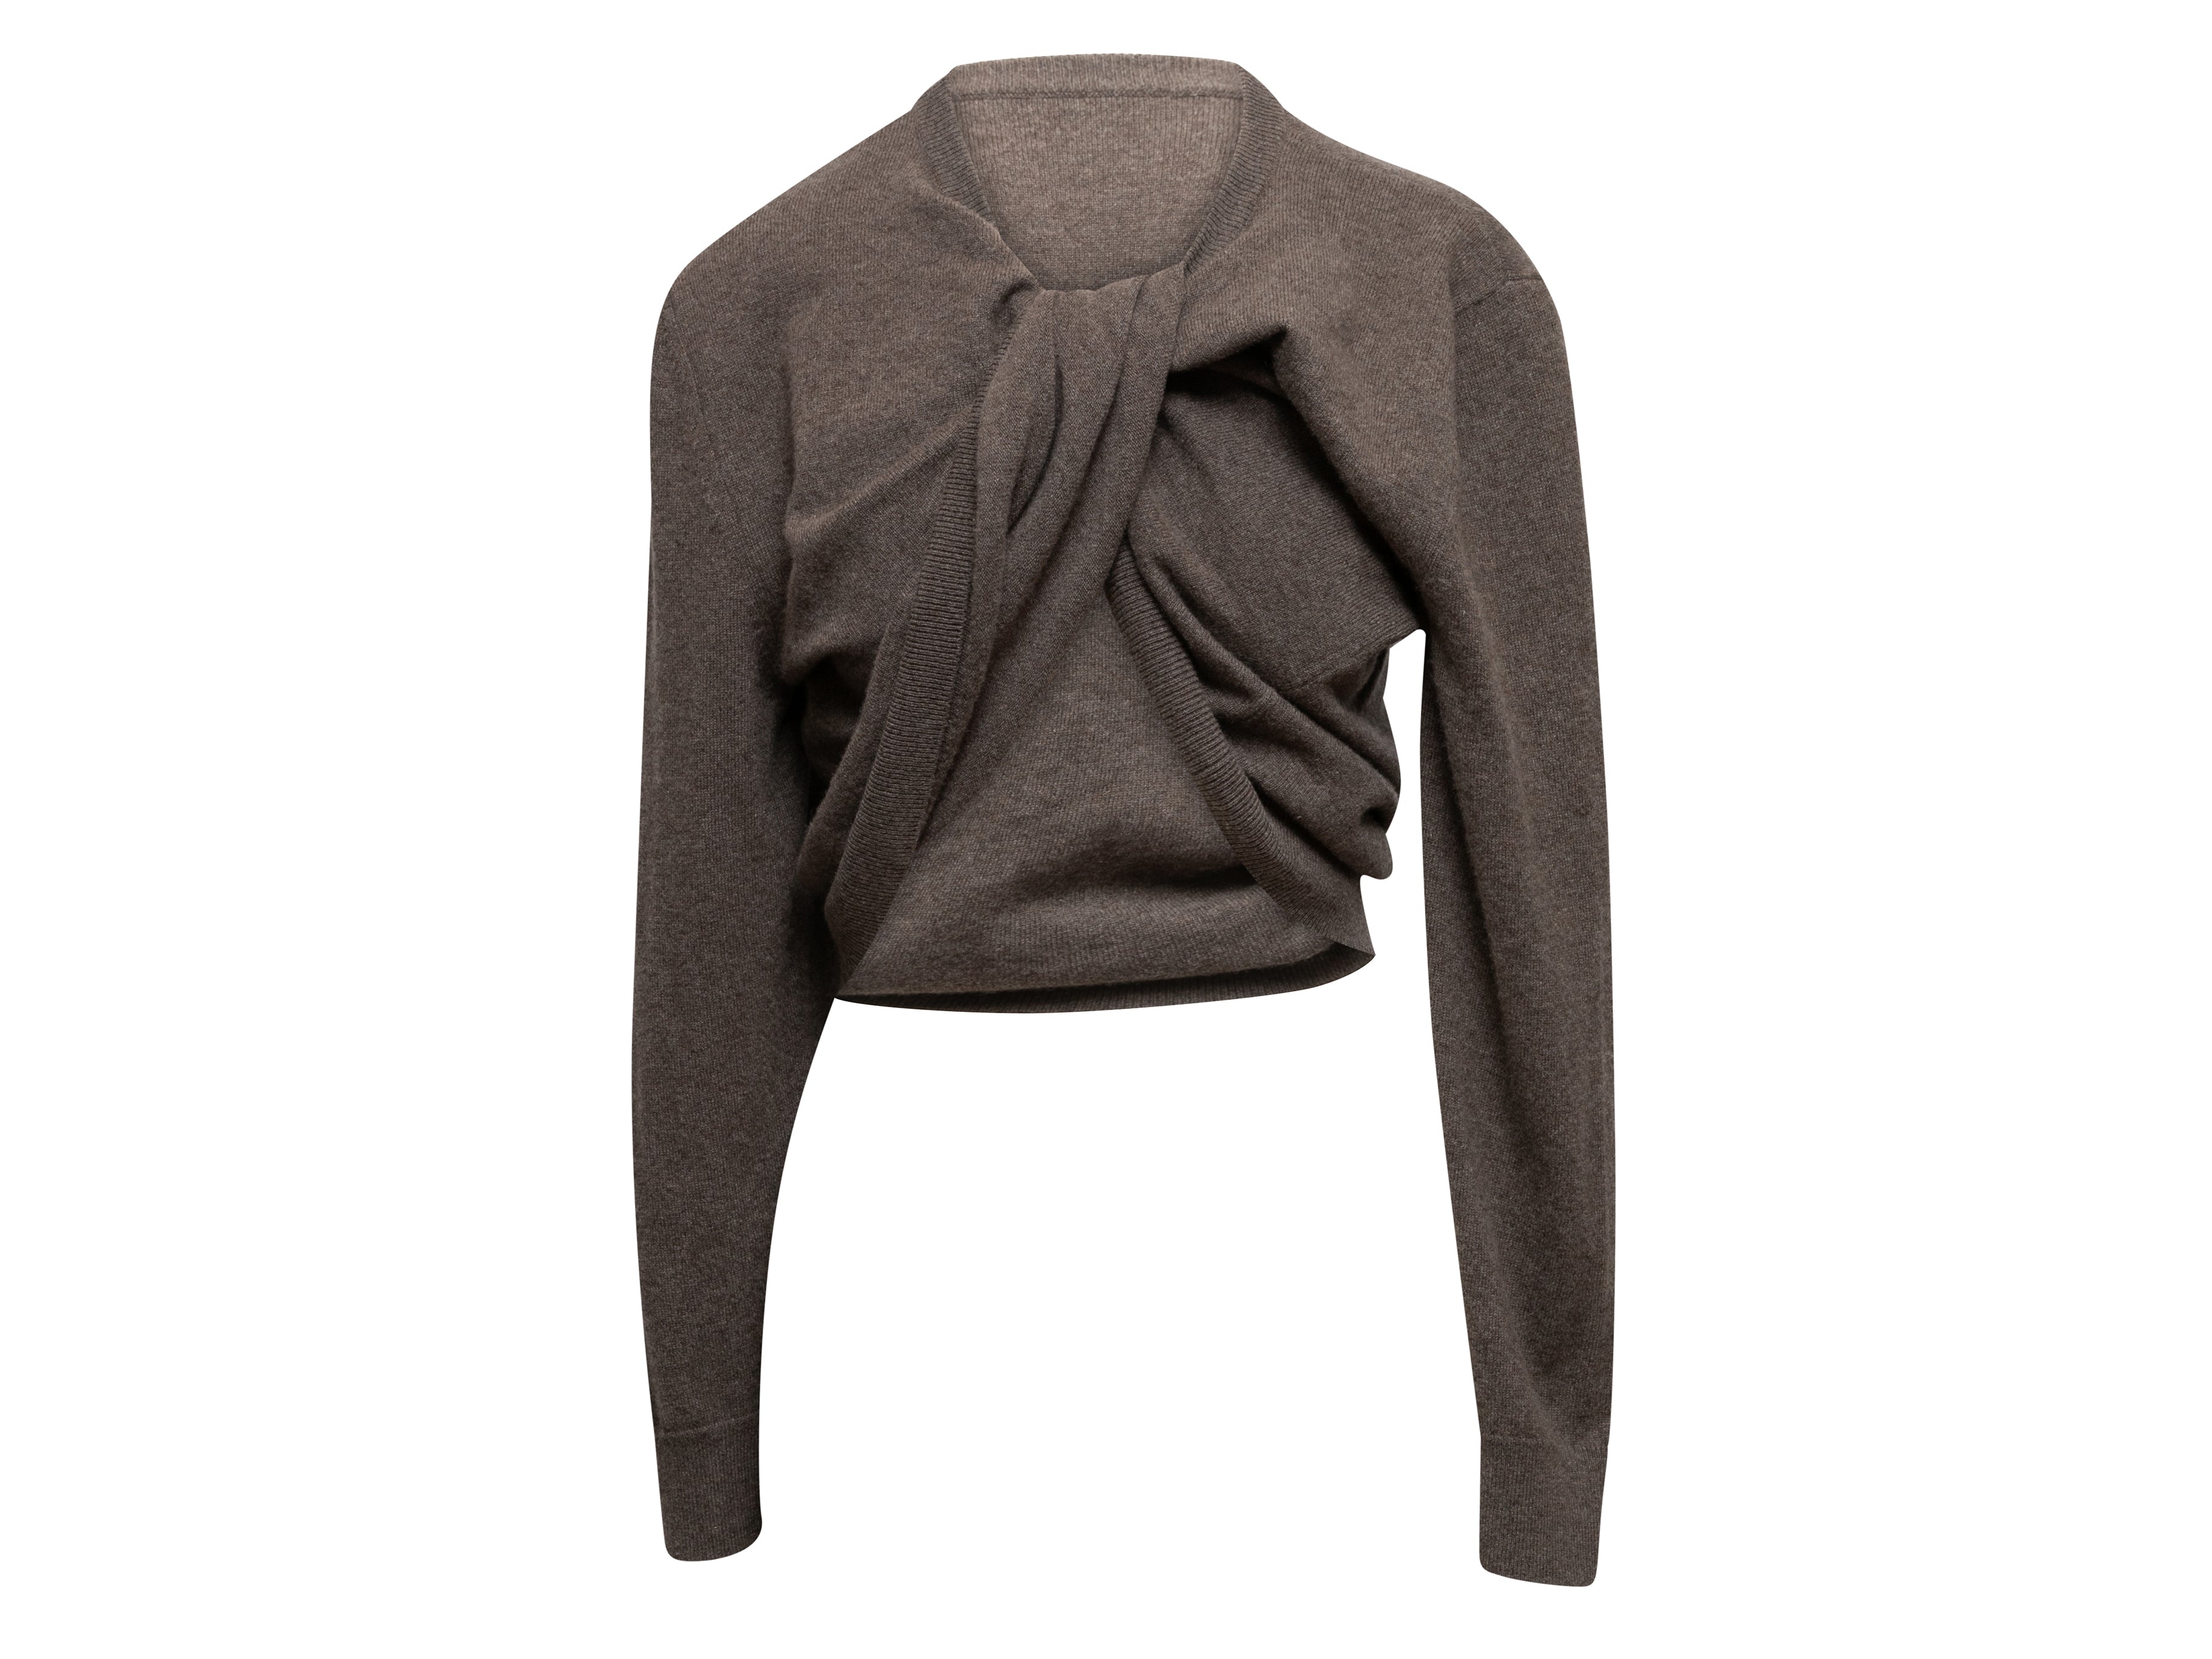 Taupe Laris Cashmere Sweater Size US XS